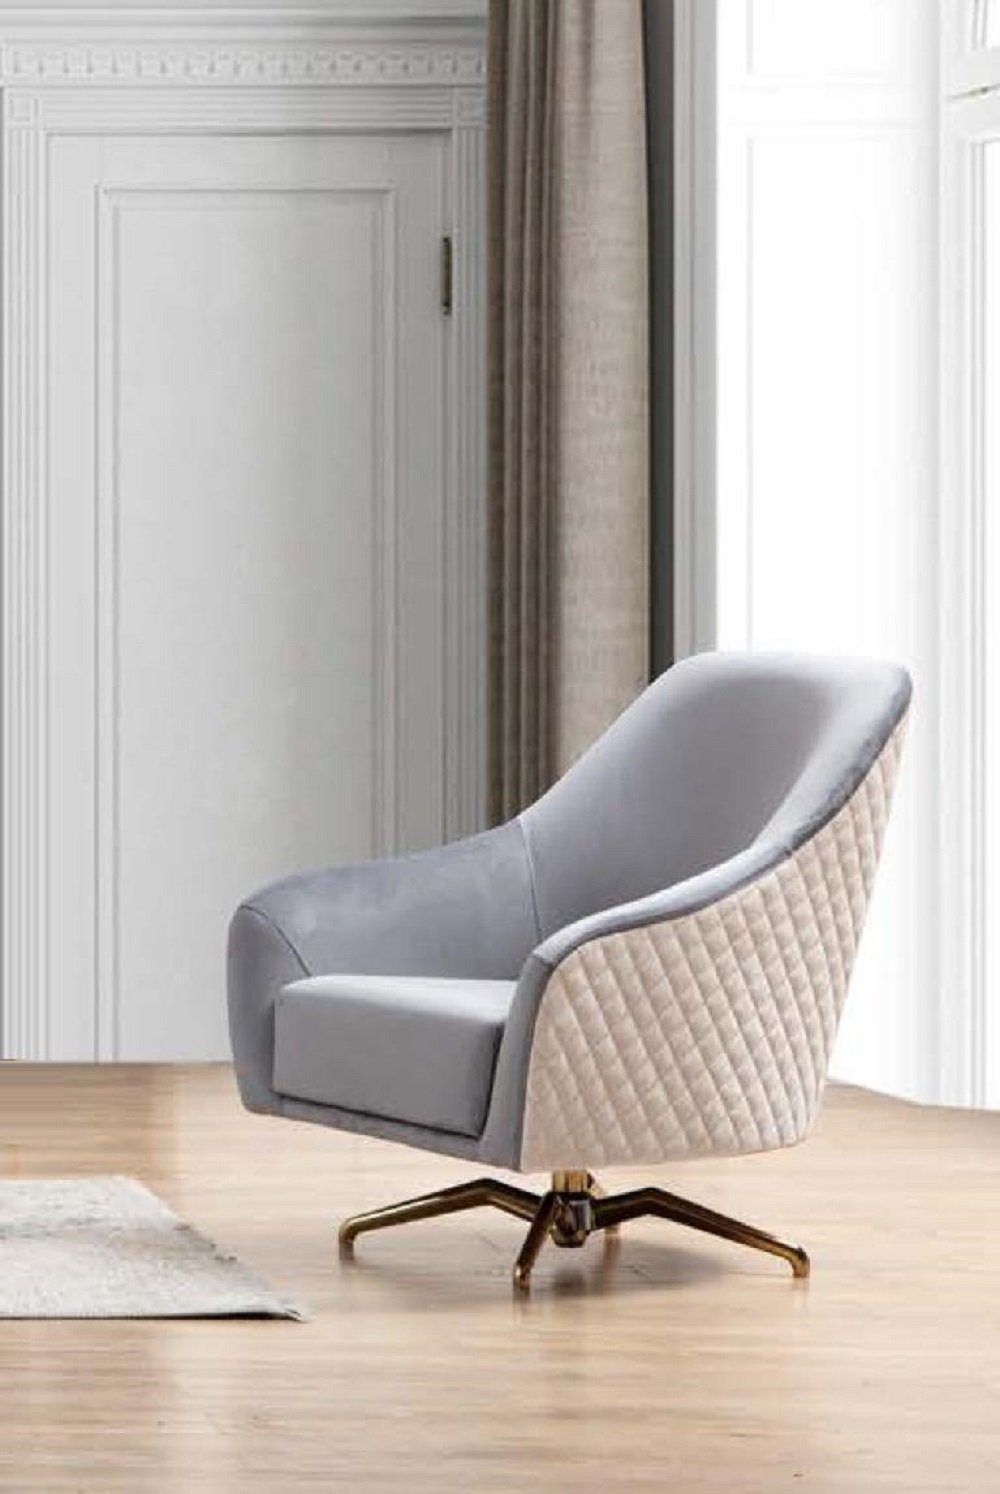 JVmoebel Sessel Design Sessel Polster Textil Modern Wohnzimmer Luxus Holz Möbel Neu